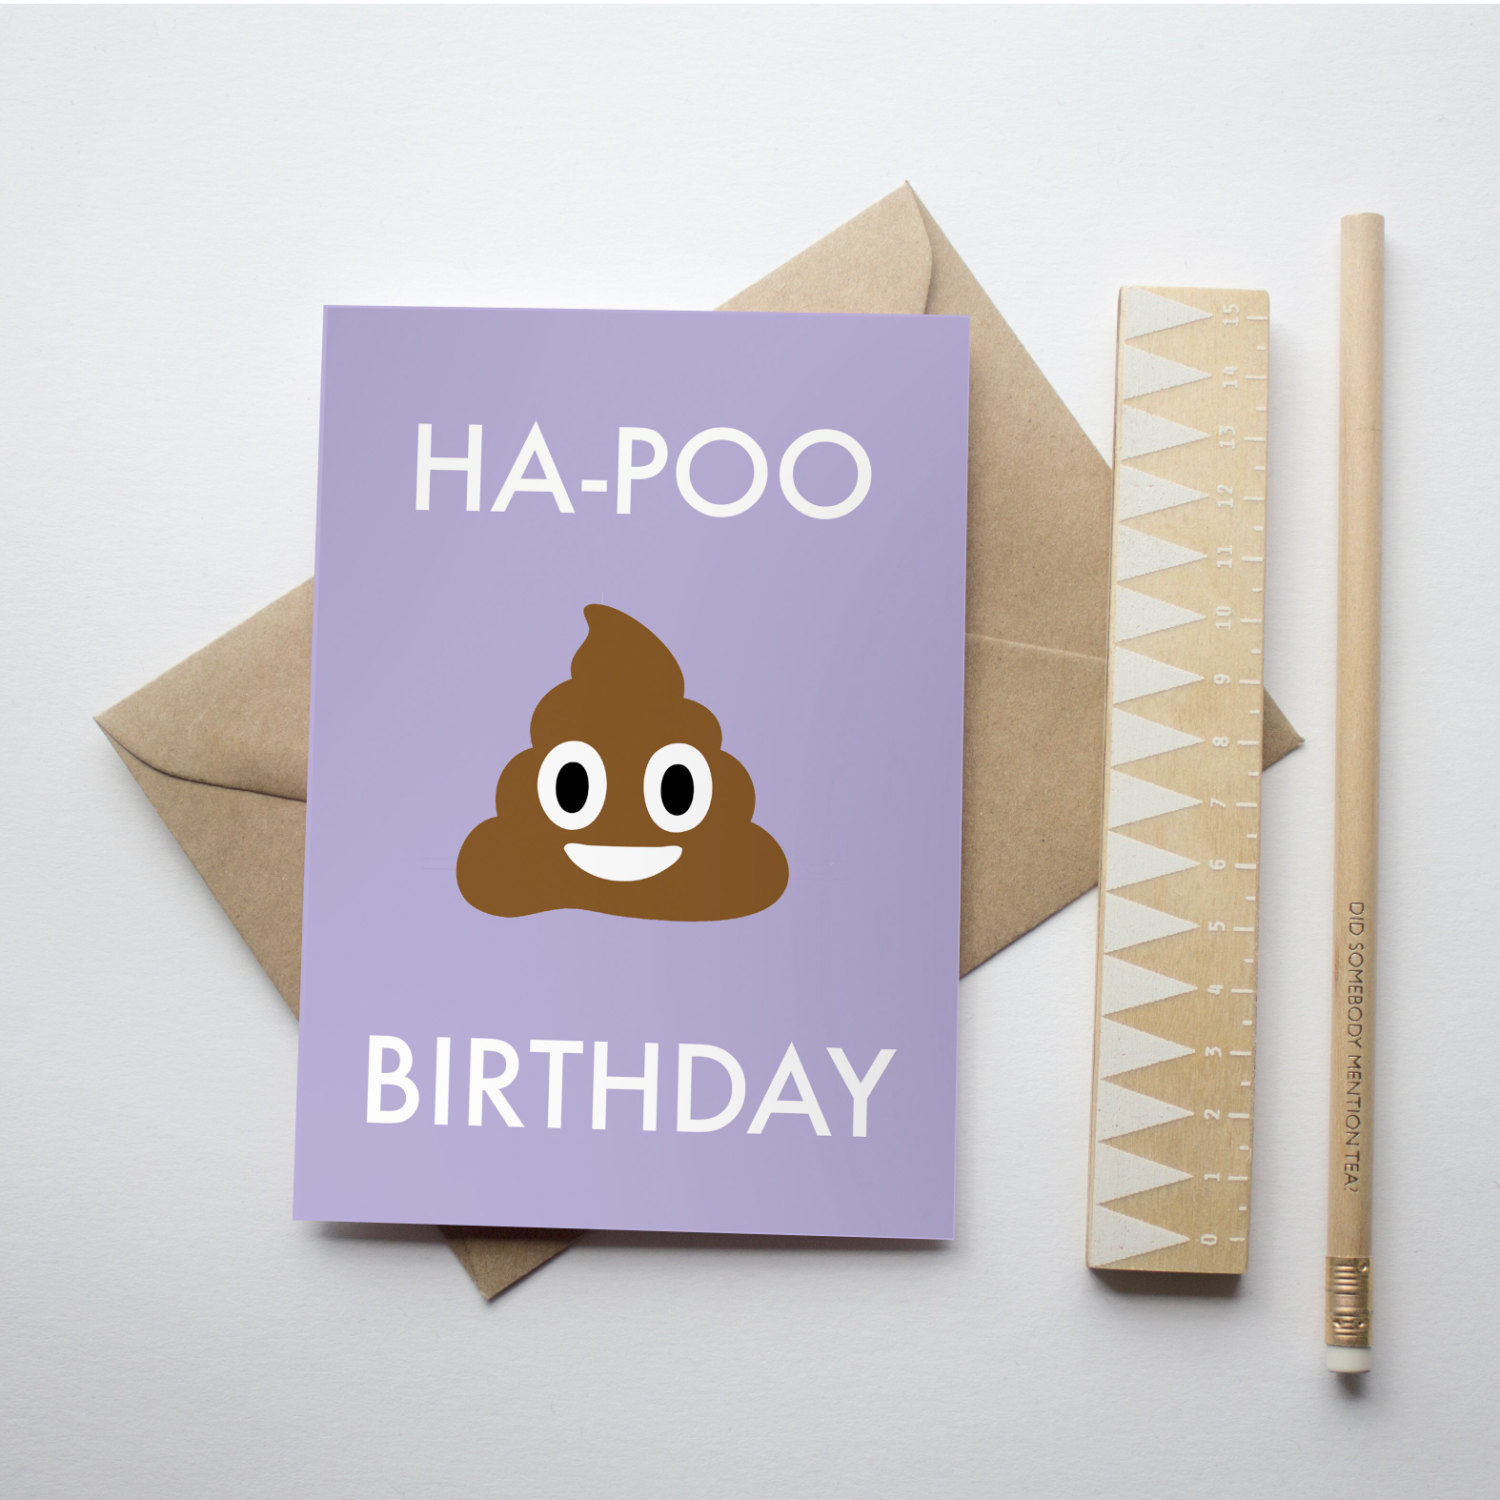 Best ideas about Emoji Birthday Card
. Save or Pin Emoji Poo Birthday Card Now.